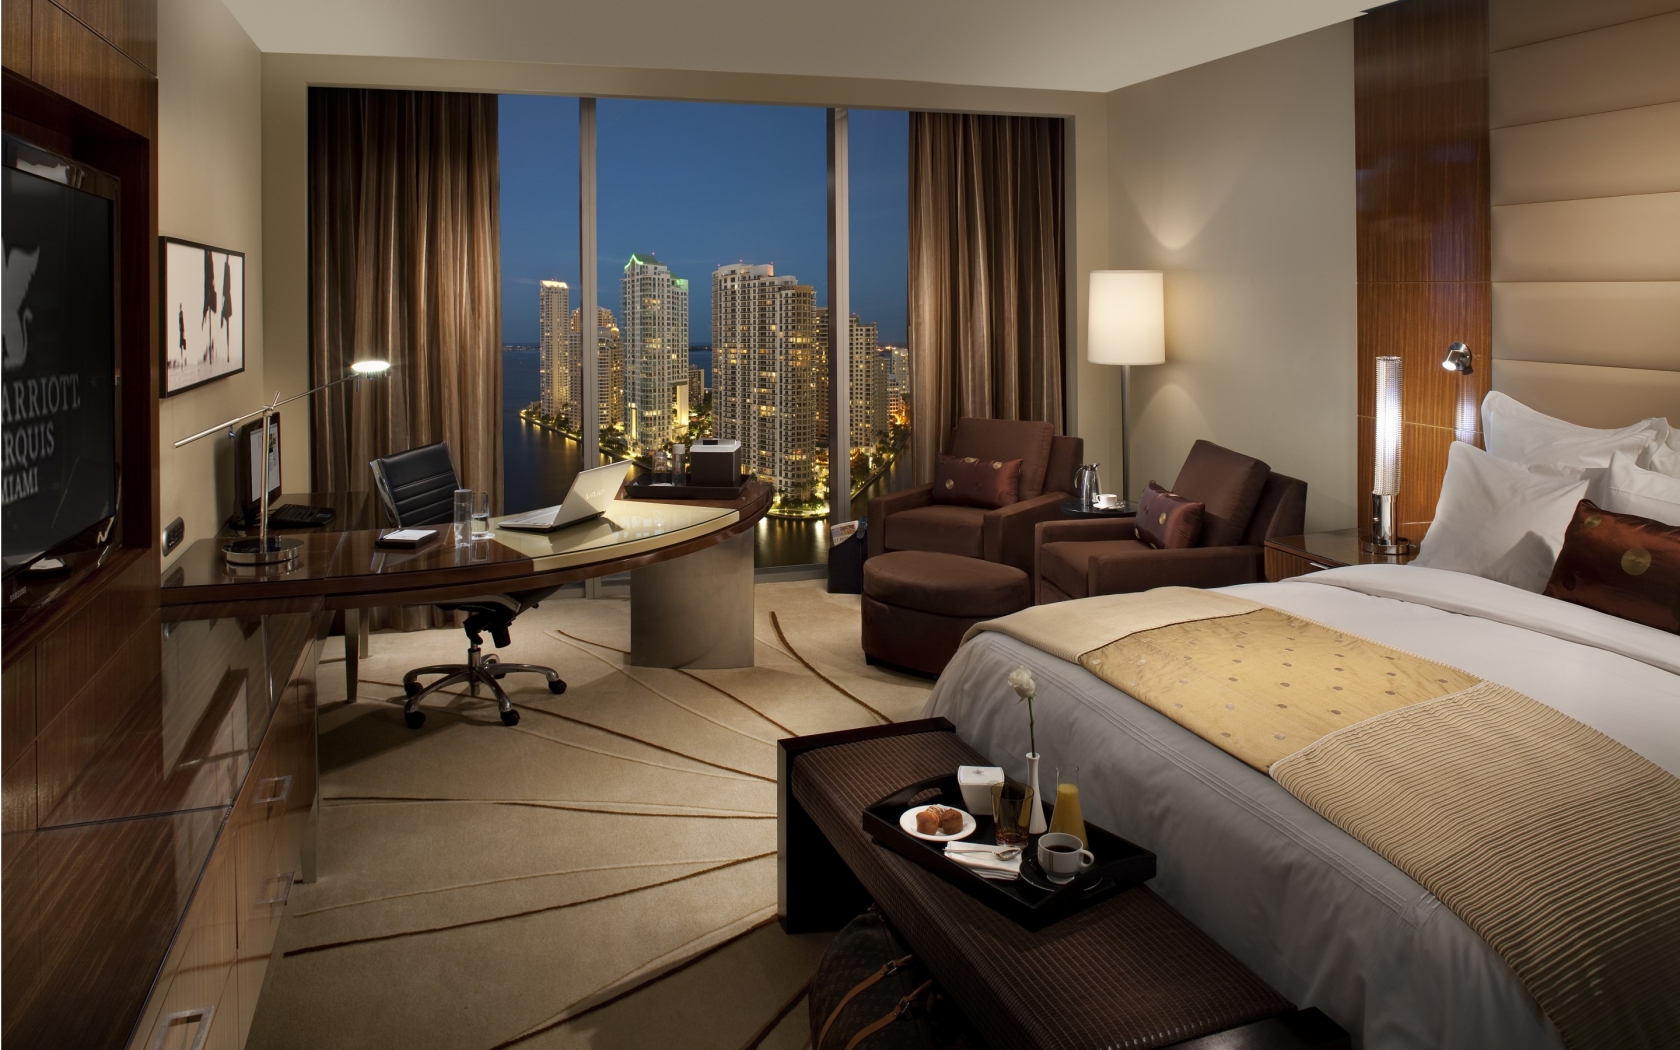 Miami Florida Hotel Room for 1680 x 1050 widescreen resolution